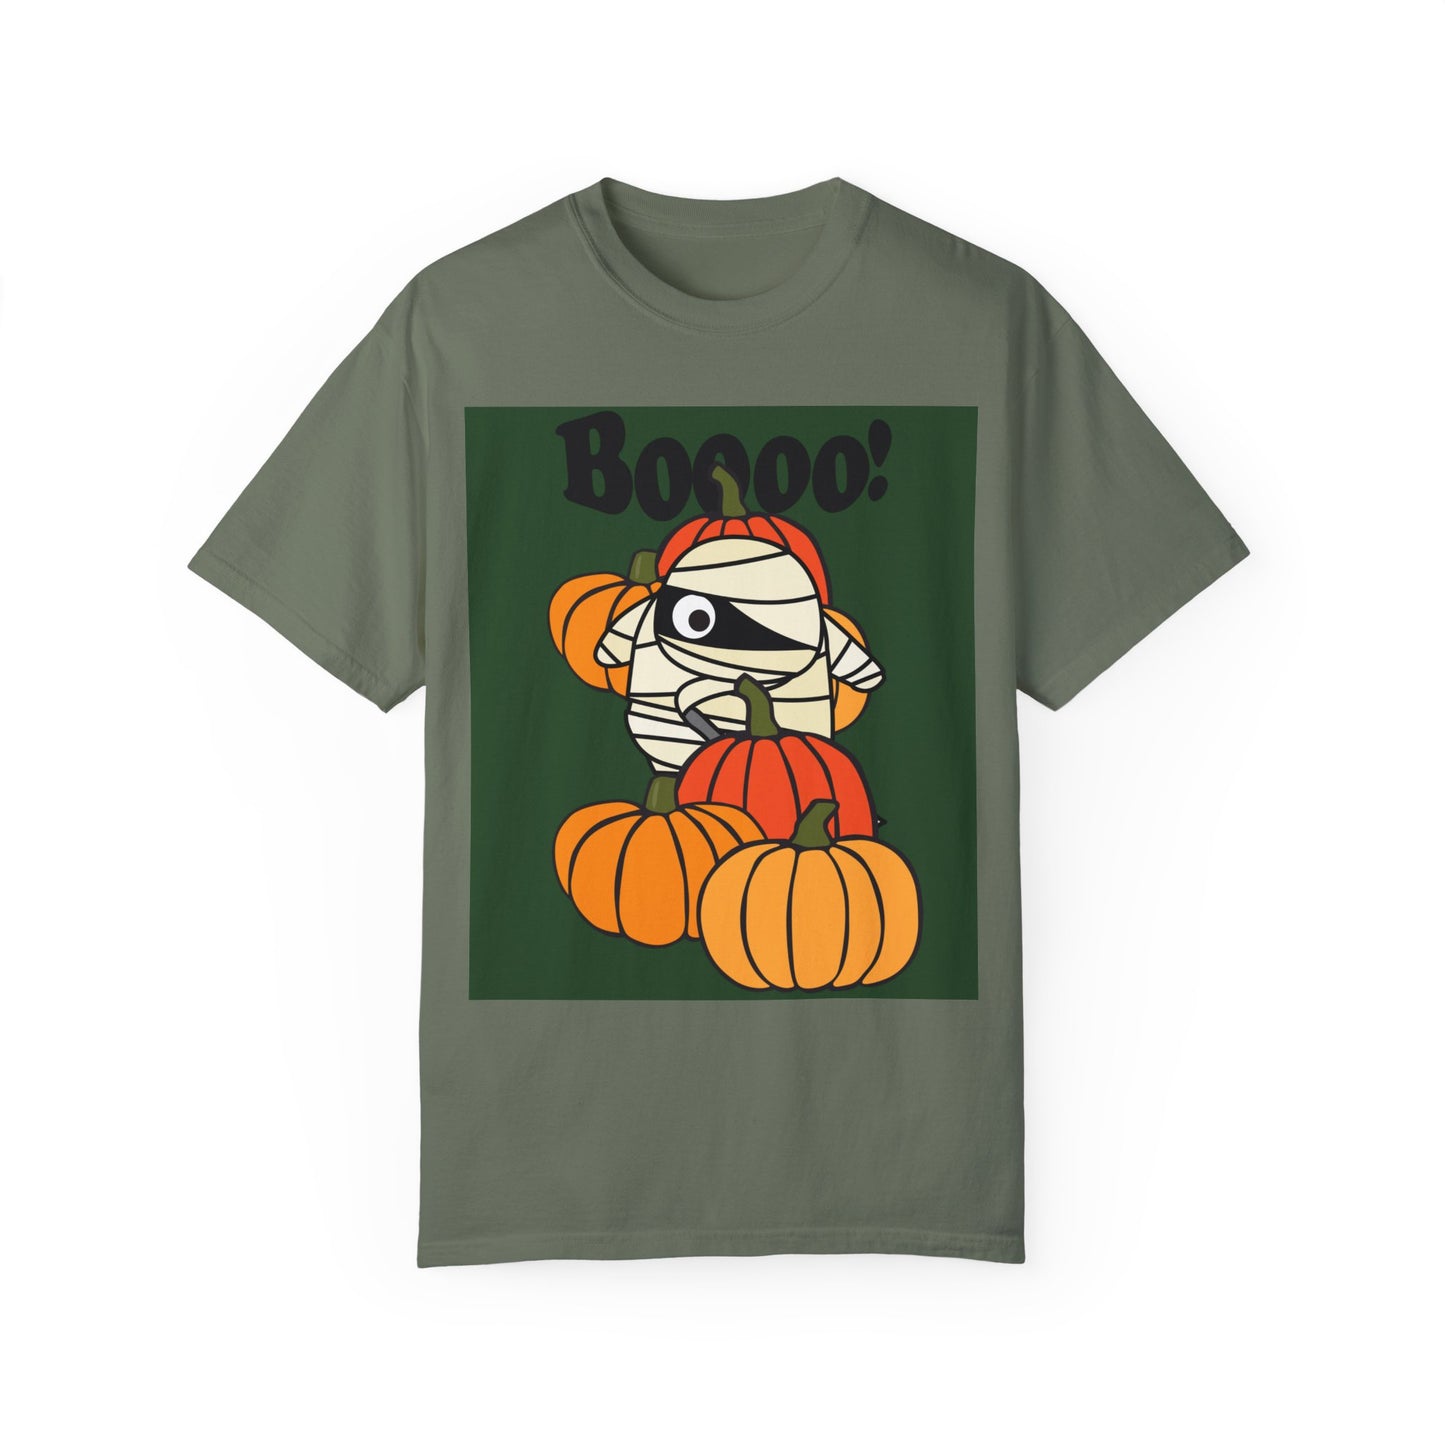 Boo Ghoul And Pumpkin Halloween Tee | Western Halloween T-Shirt Unisex Funny Ghost Graphic Print Shirt Tee Top